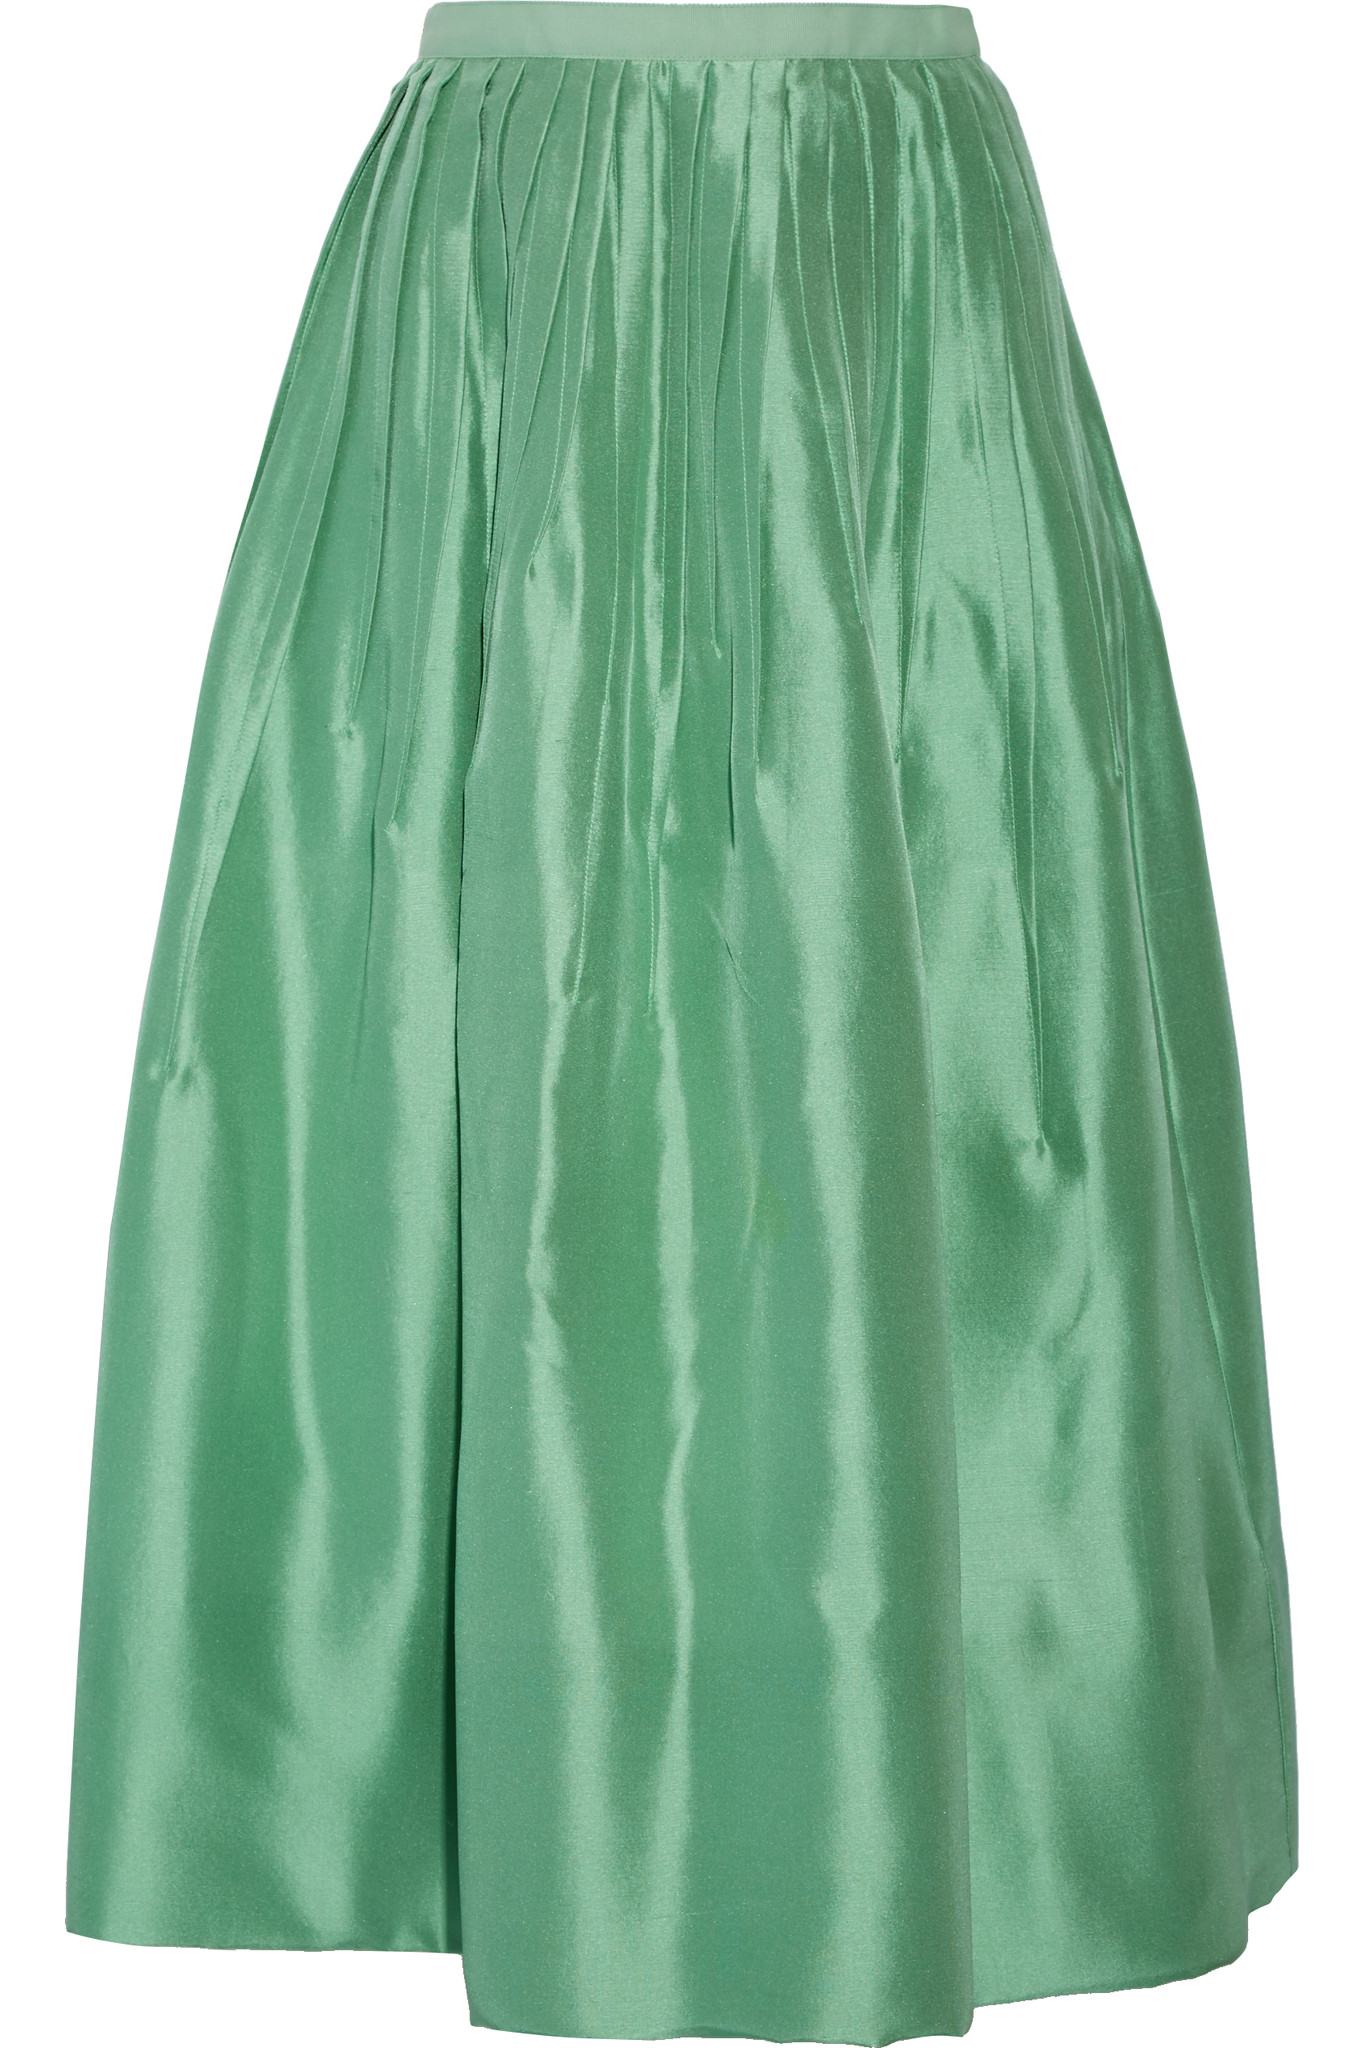 Lyst - Oscar de la renta Pleated Silk-satin Midi Skirt in Green - Save 28%